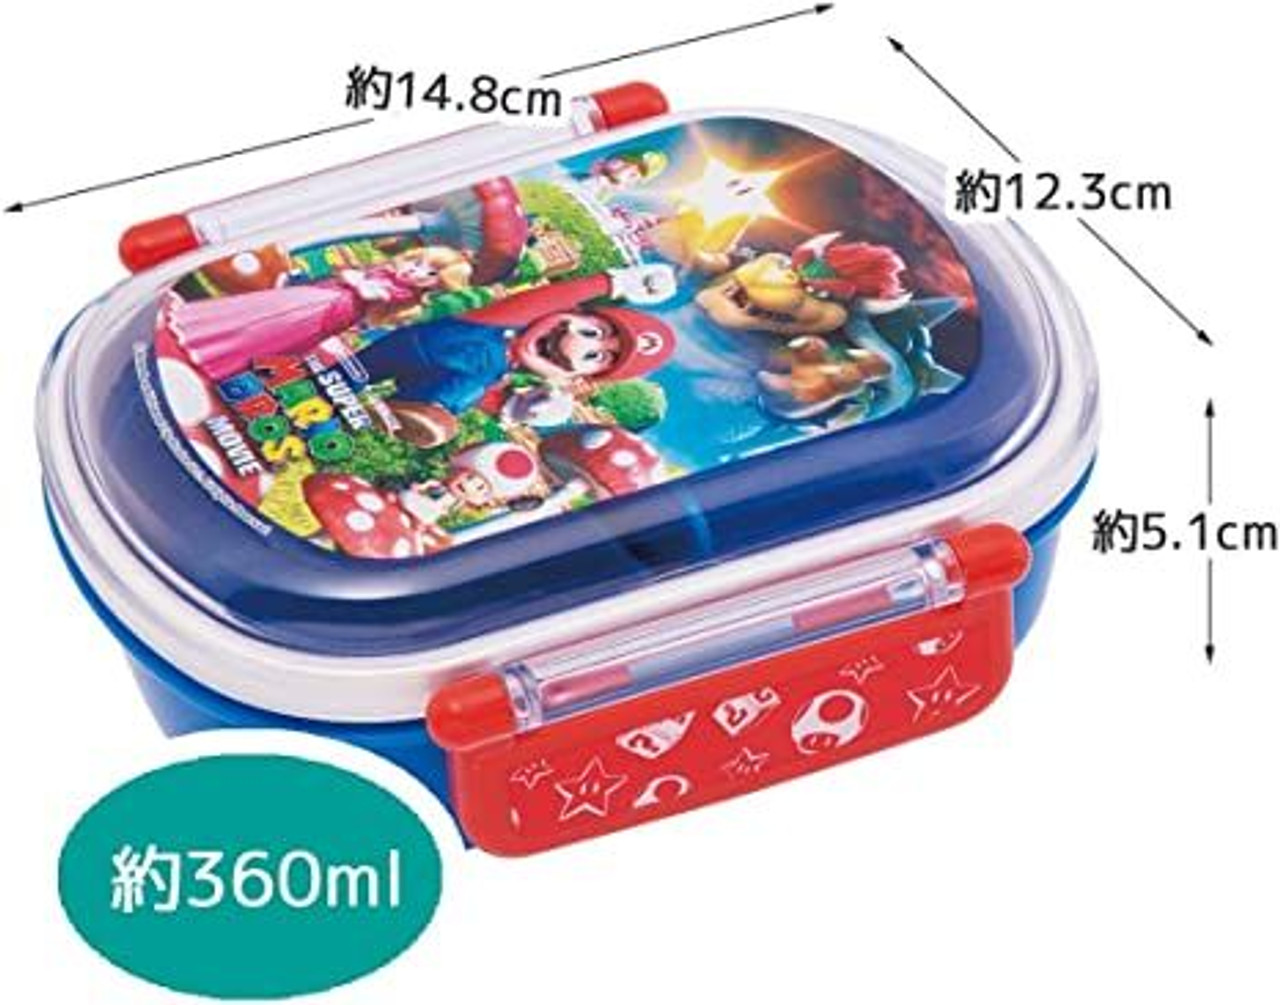 Skater Aluminum Lunch Box Super Mario 23 - Plaza Japan